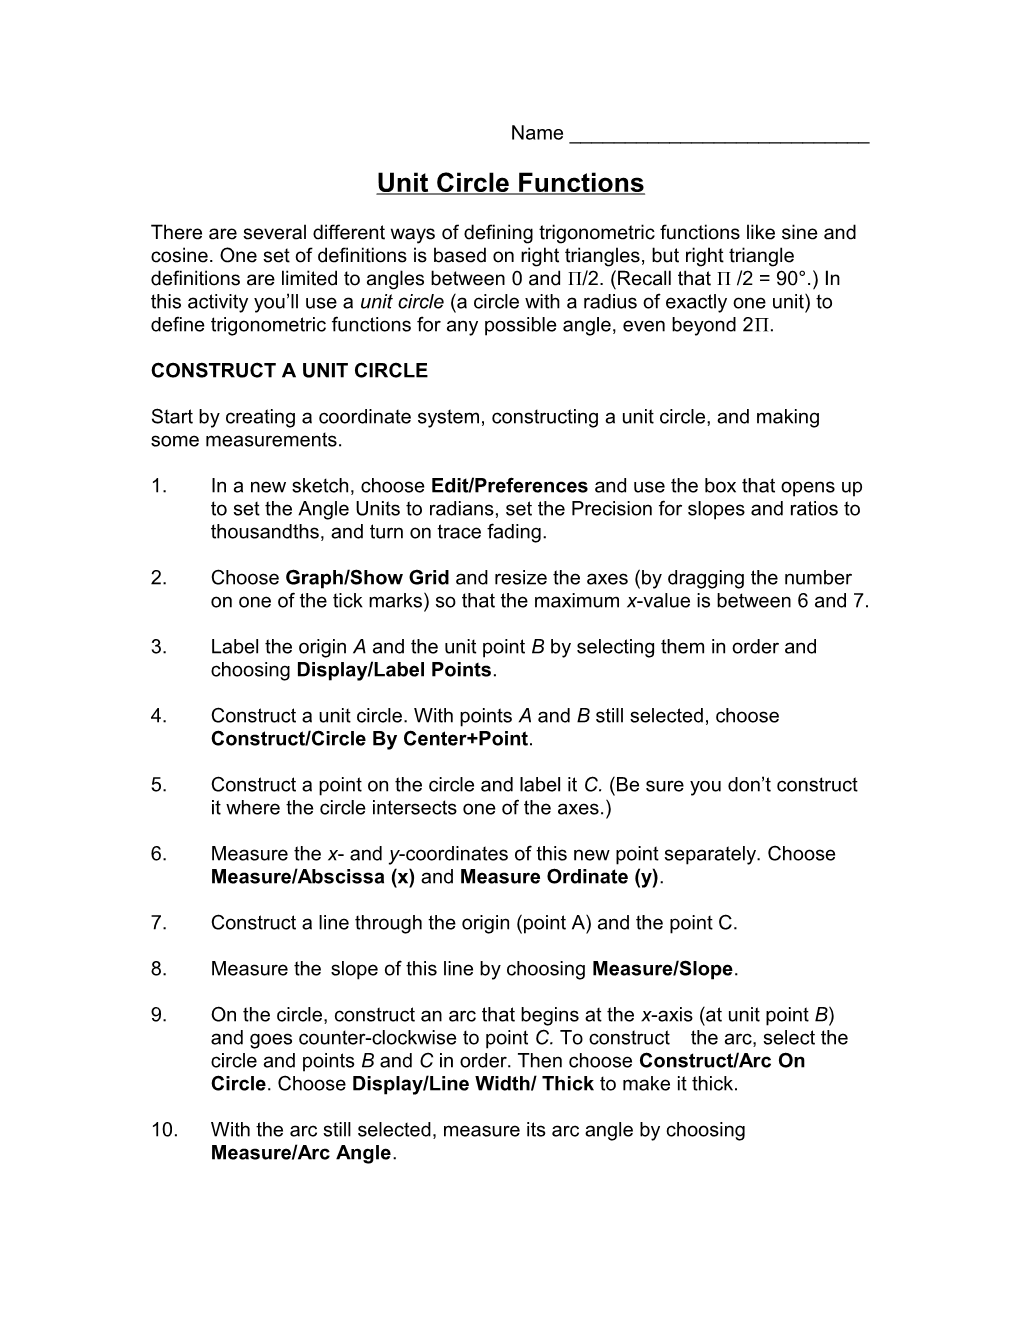 Unit Circle Functions